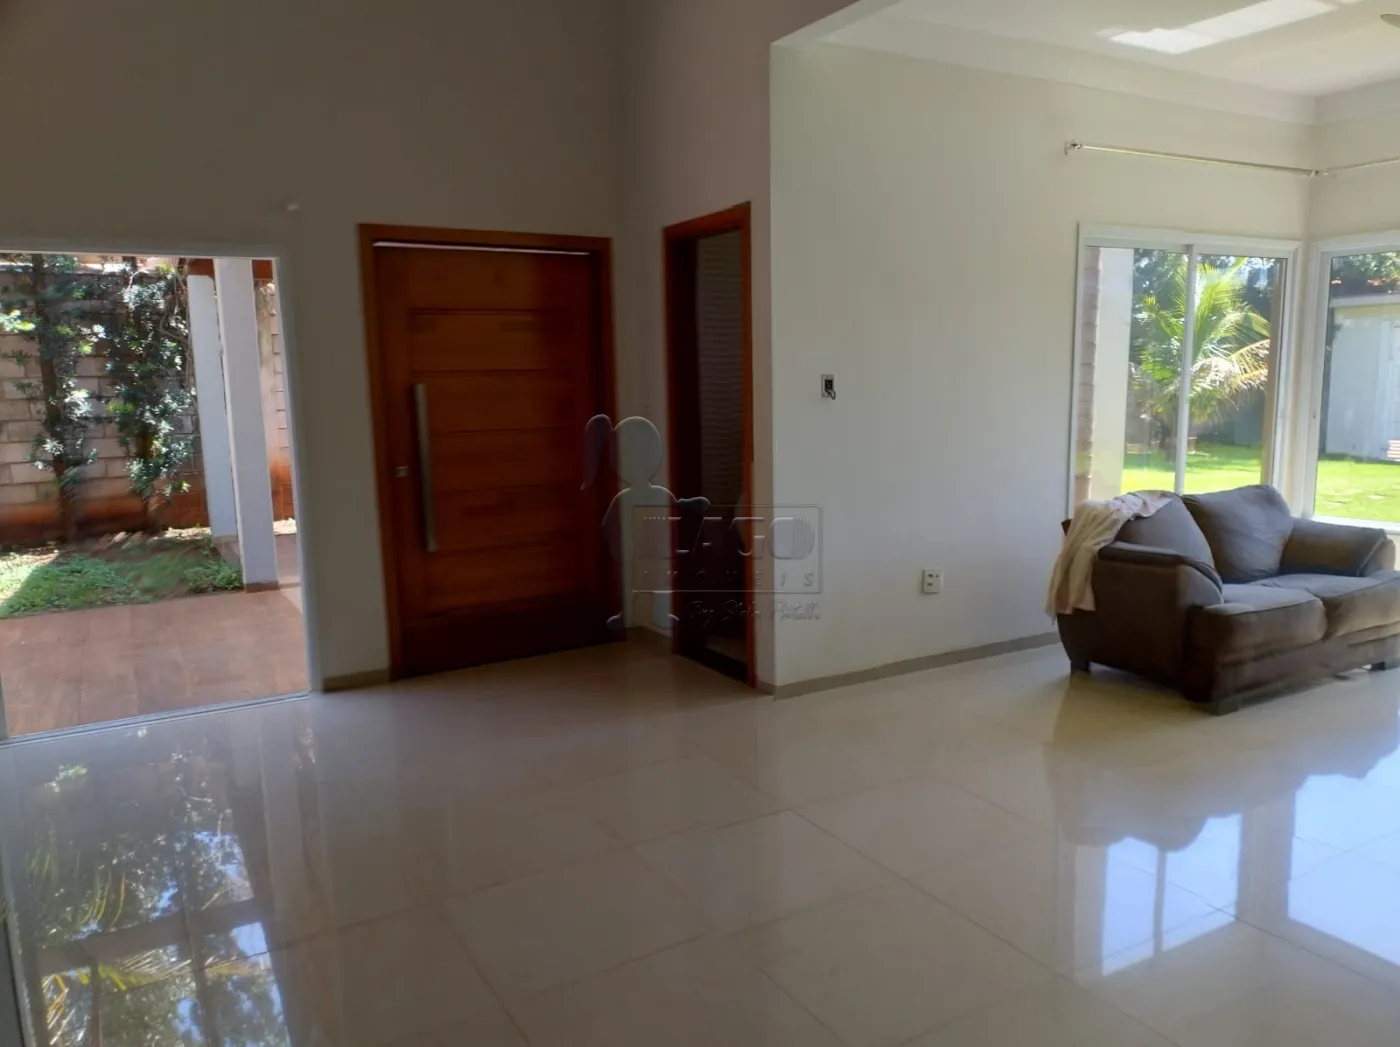 Alugar Casas / Condomínio em Jardinópolis R$ 3.500,00 - Foto 8